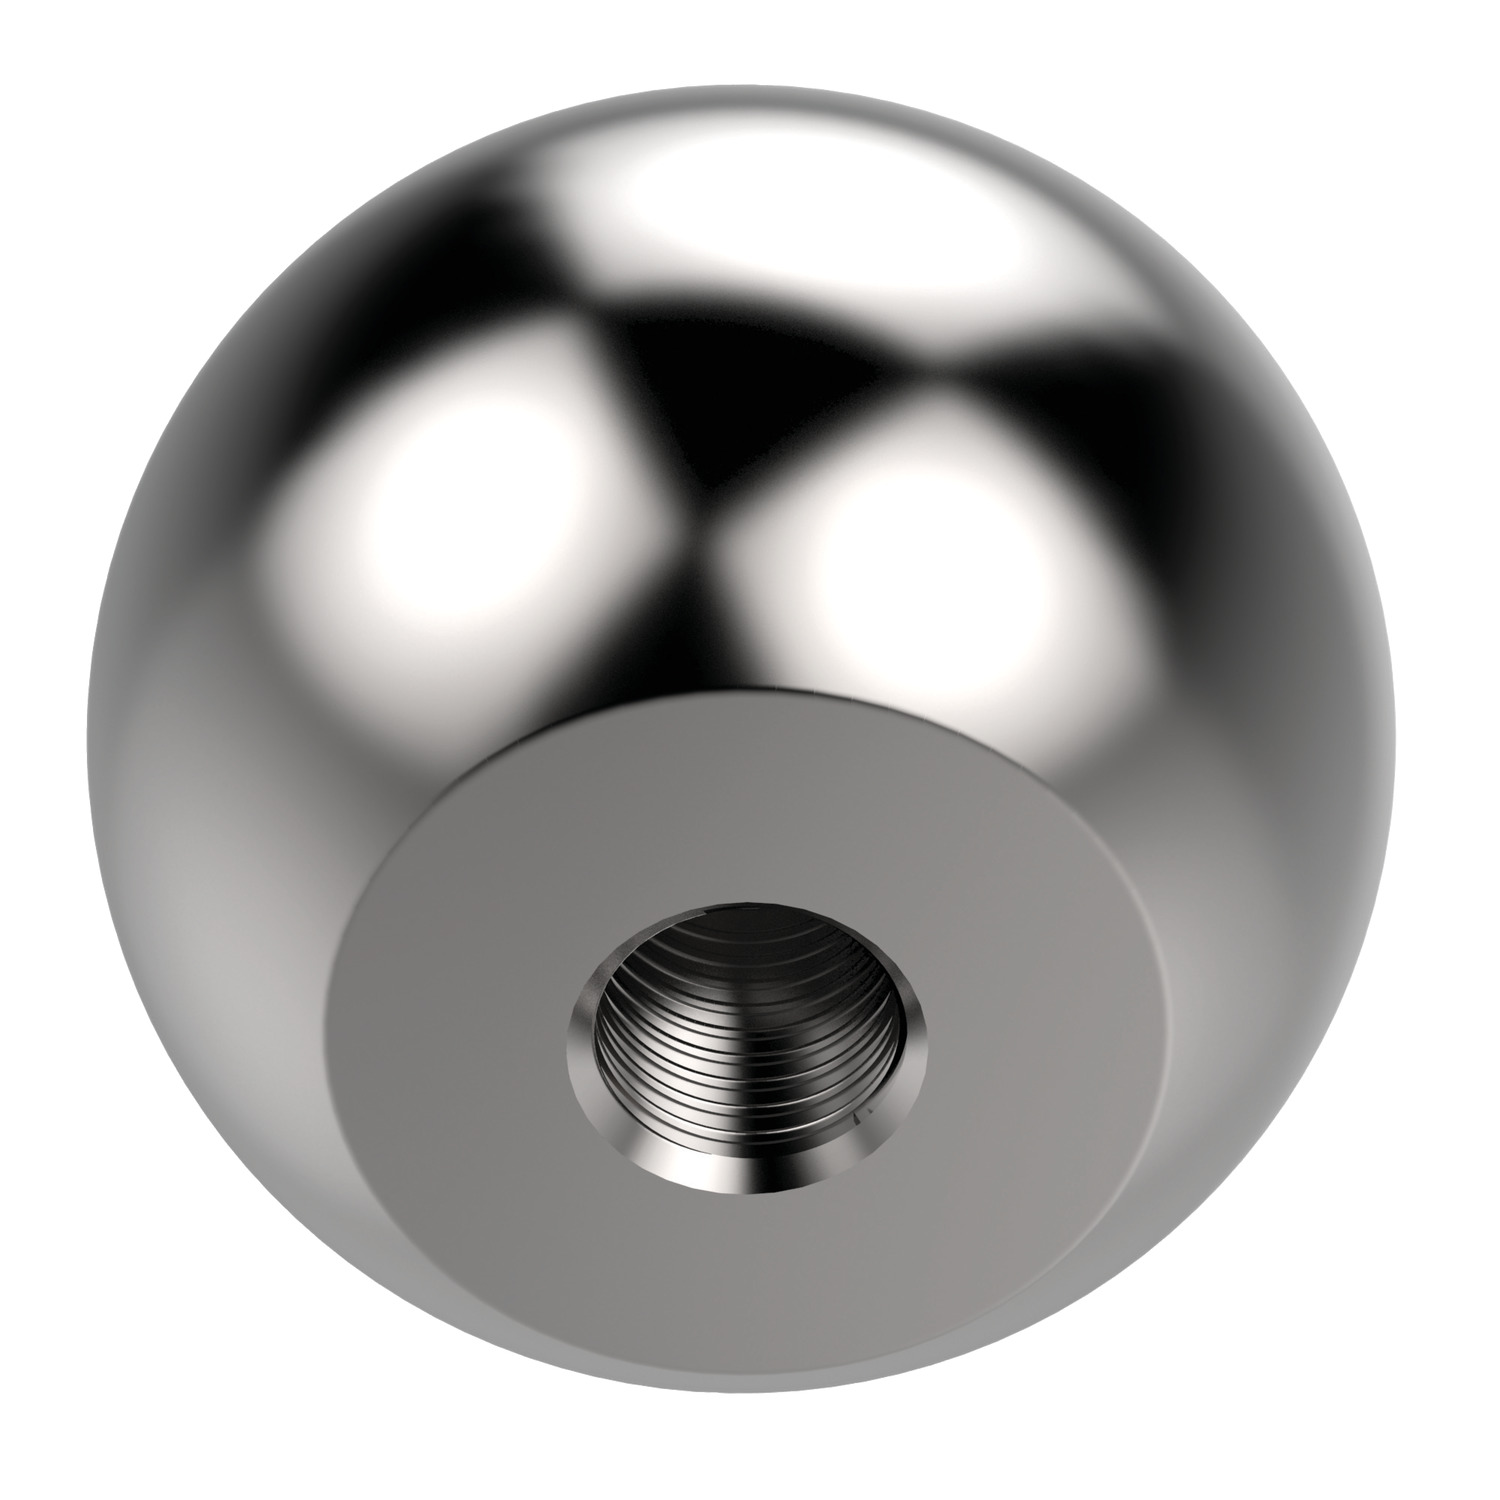 Ball and Mushroom Knobs A wide range of ball and mushroom knobs in plastic, steel, stainless steel and aluminium.